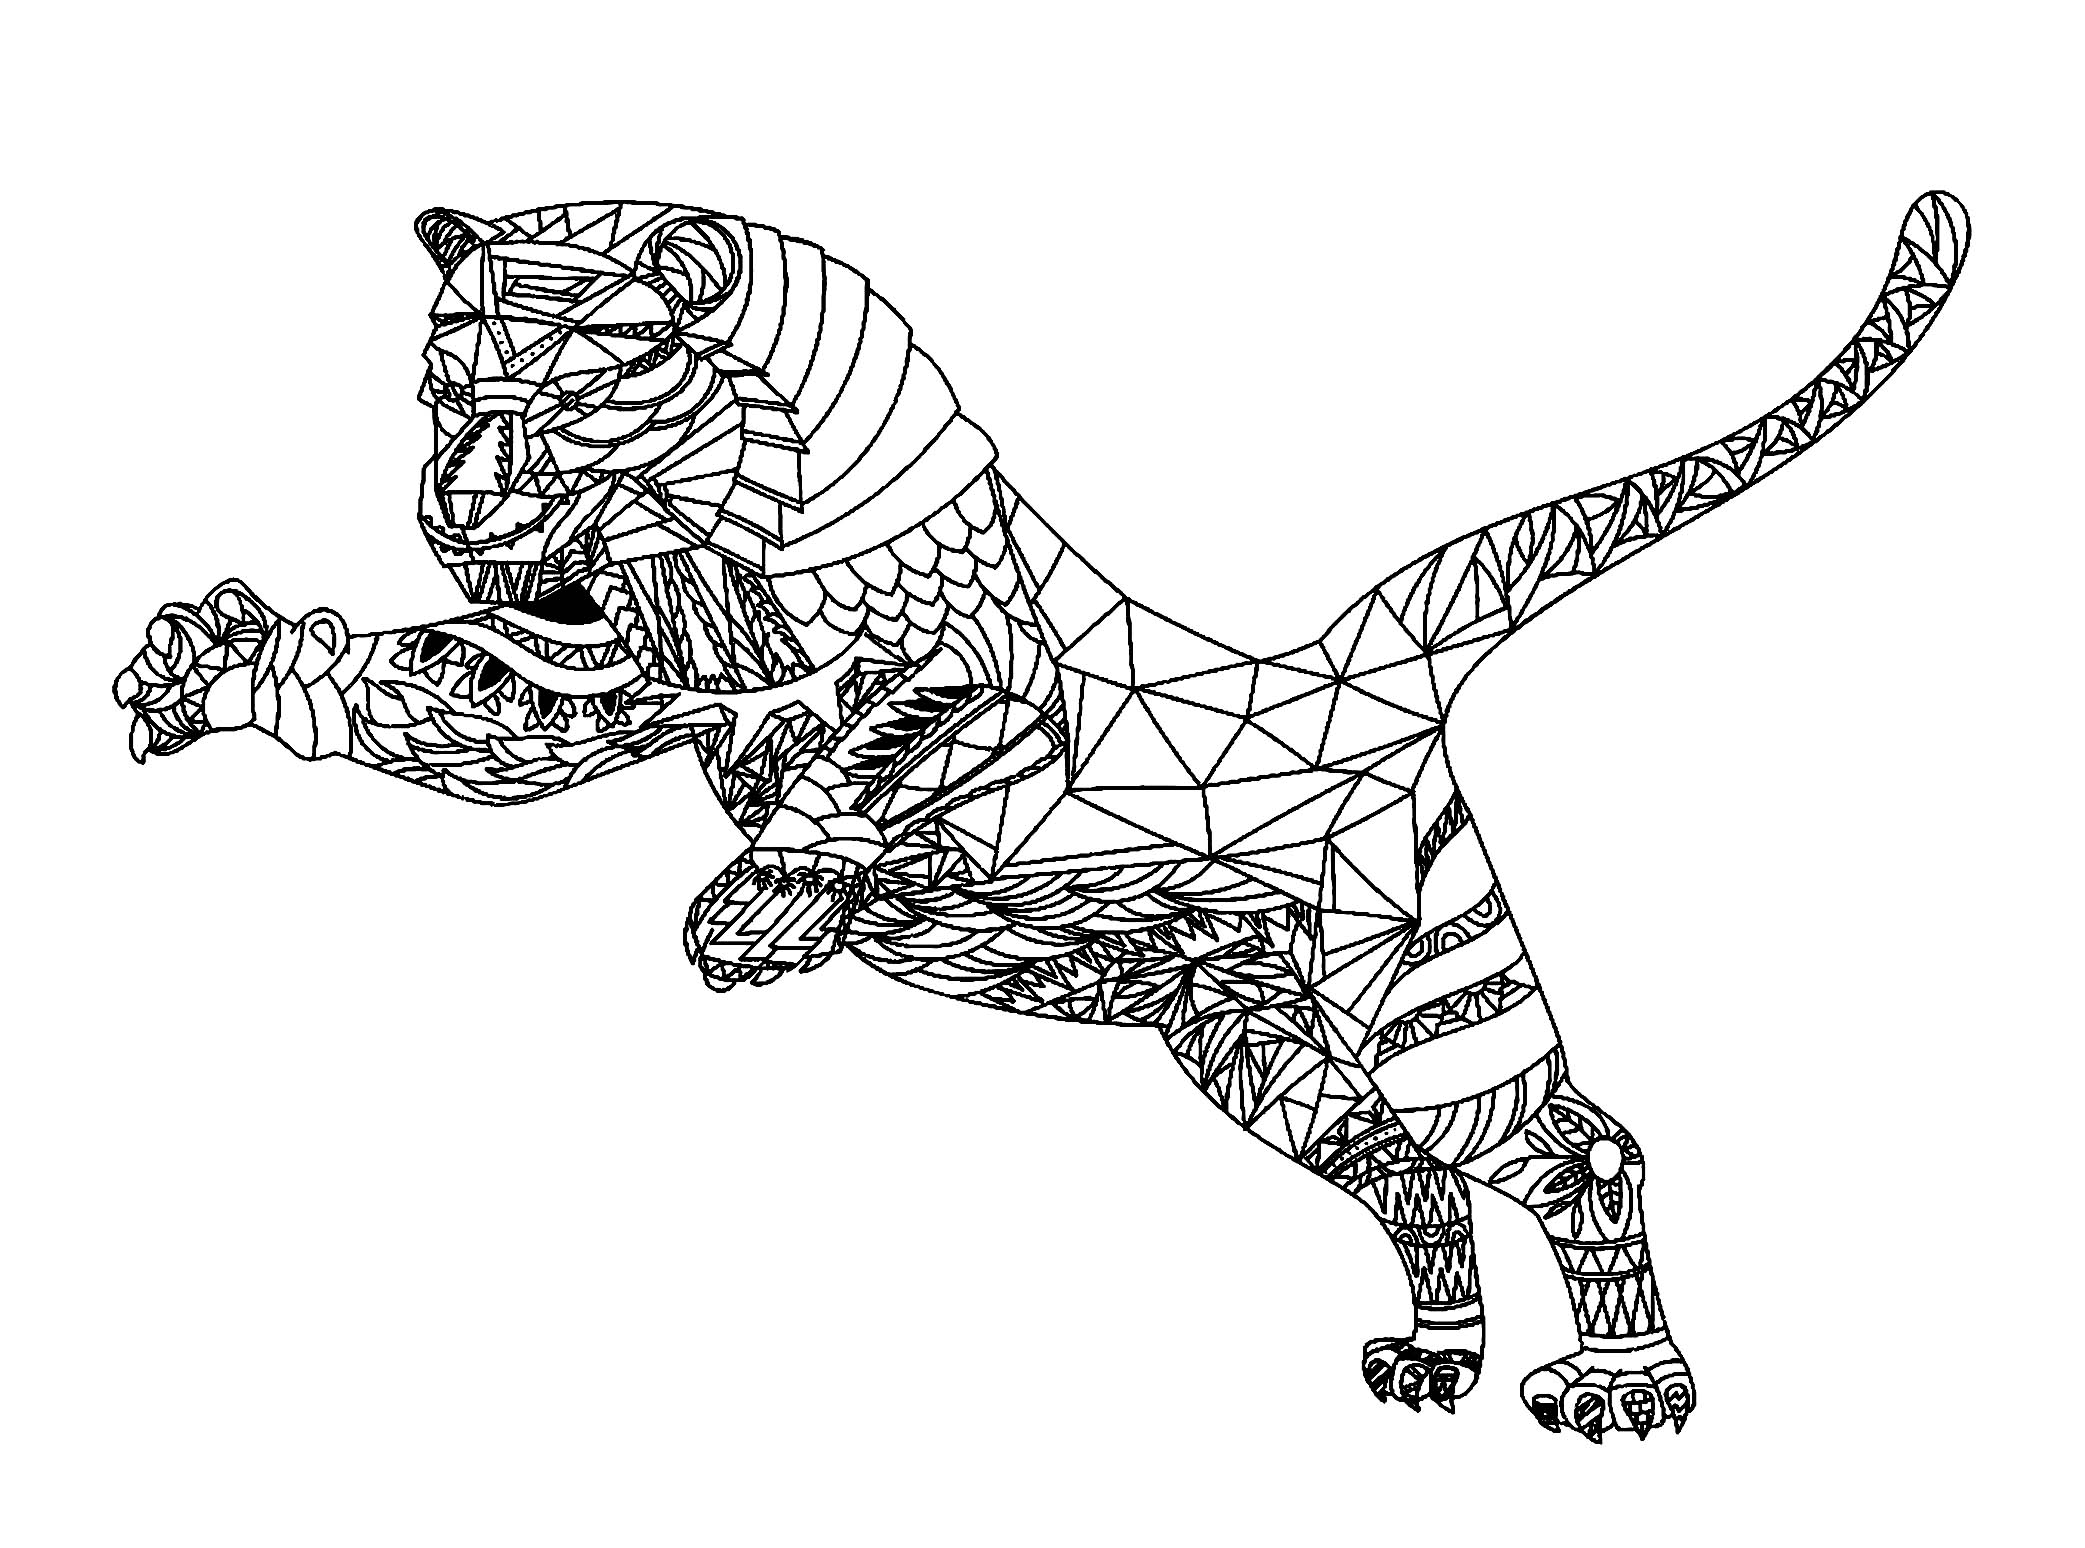 Desenhos para colorir de Tigres para imprimir, Artista : Mikhail Mikhnevich   Fonte : 123rf